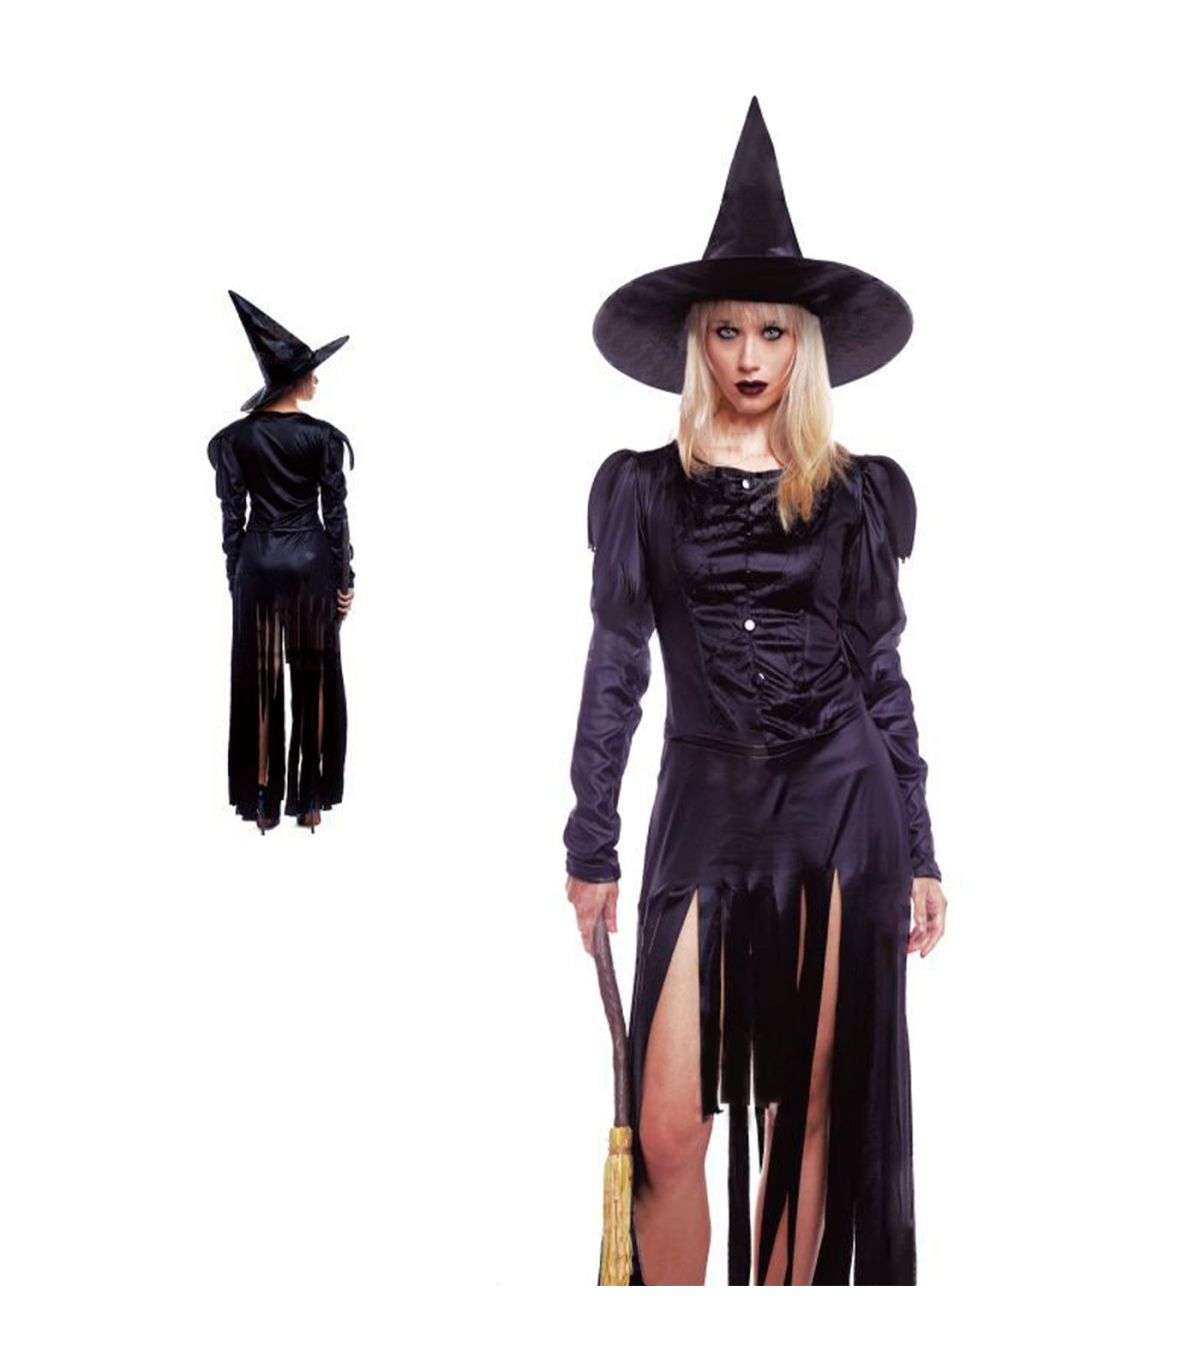 Tradineur - Disfraz de bruja negra para mujer, poliéster, incluye